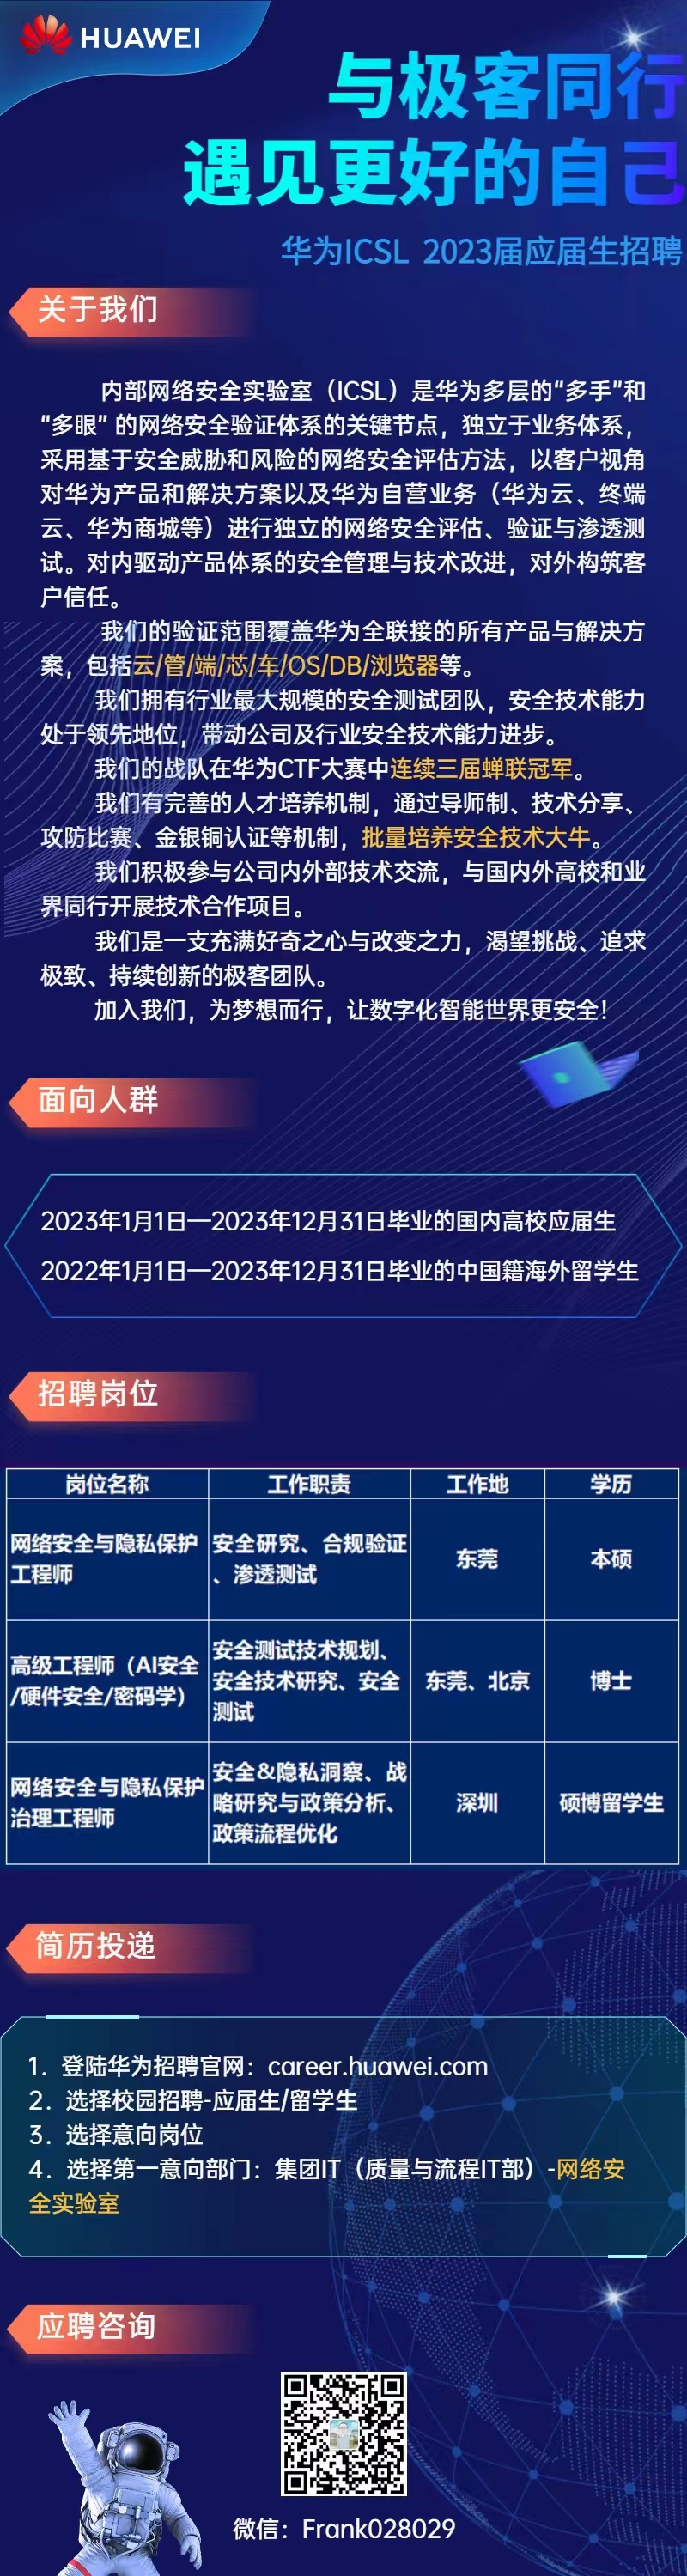 Huawei-openings 20220916